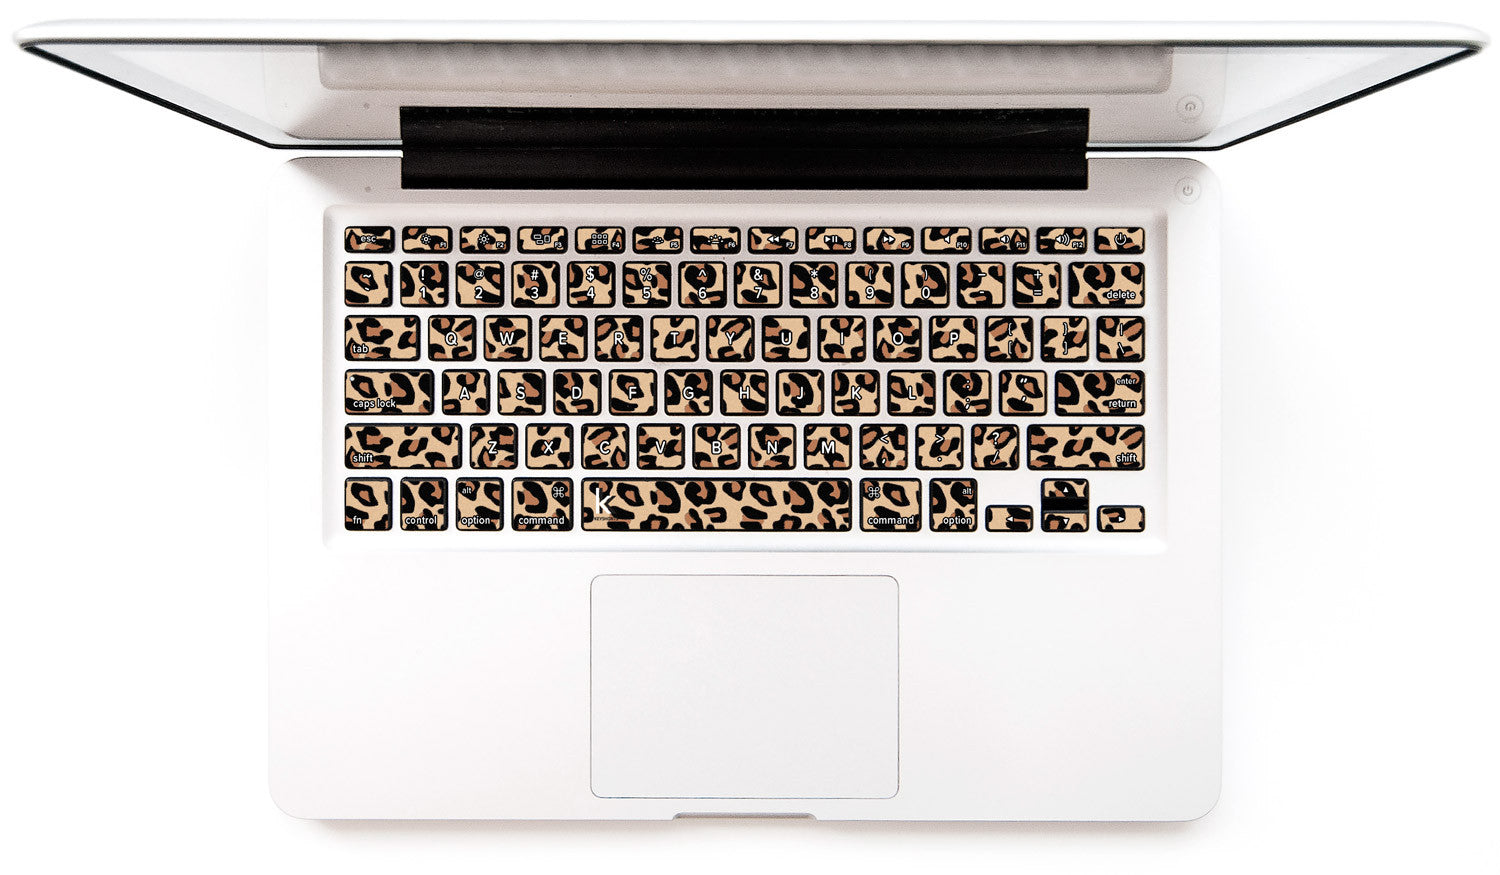 Cheetah MacBook Keyboard Stickers decals